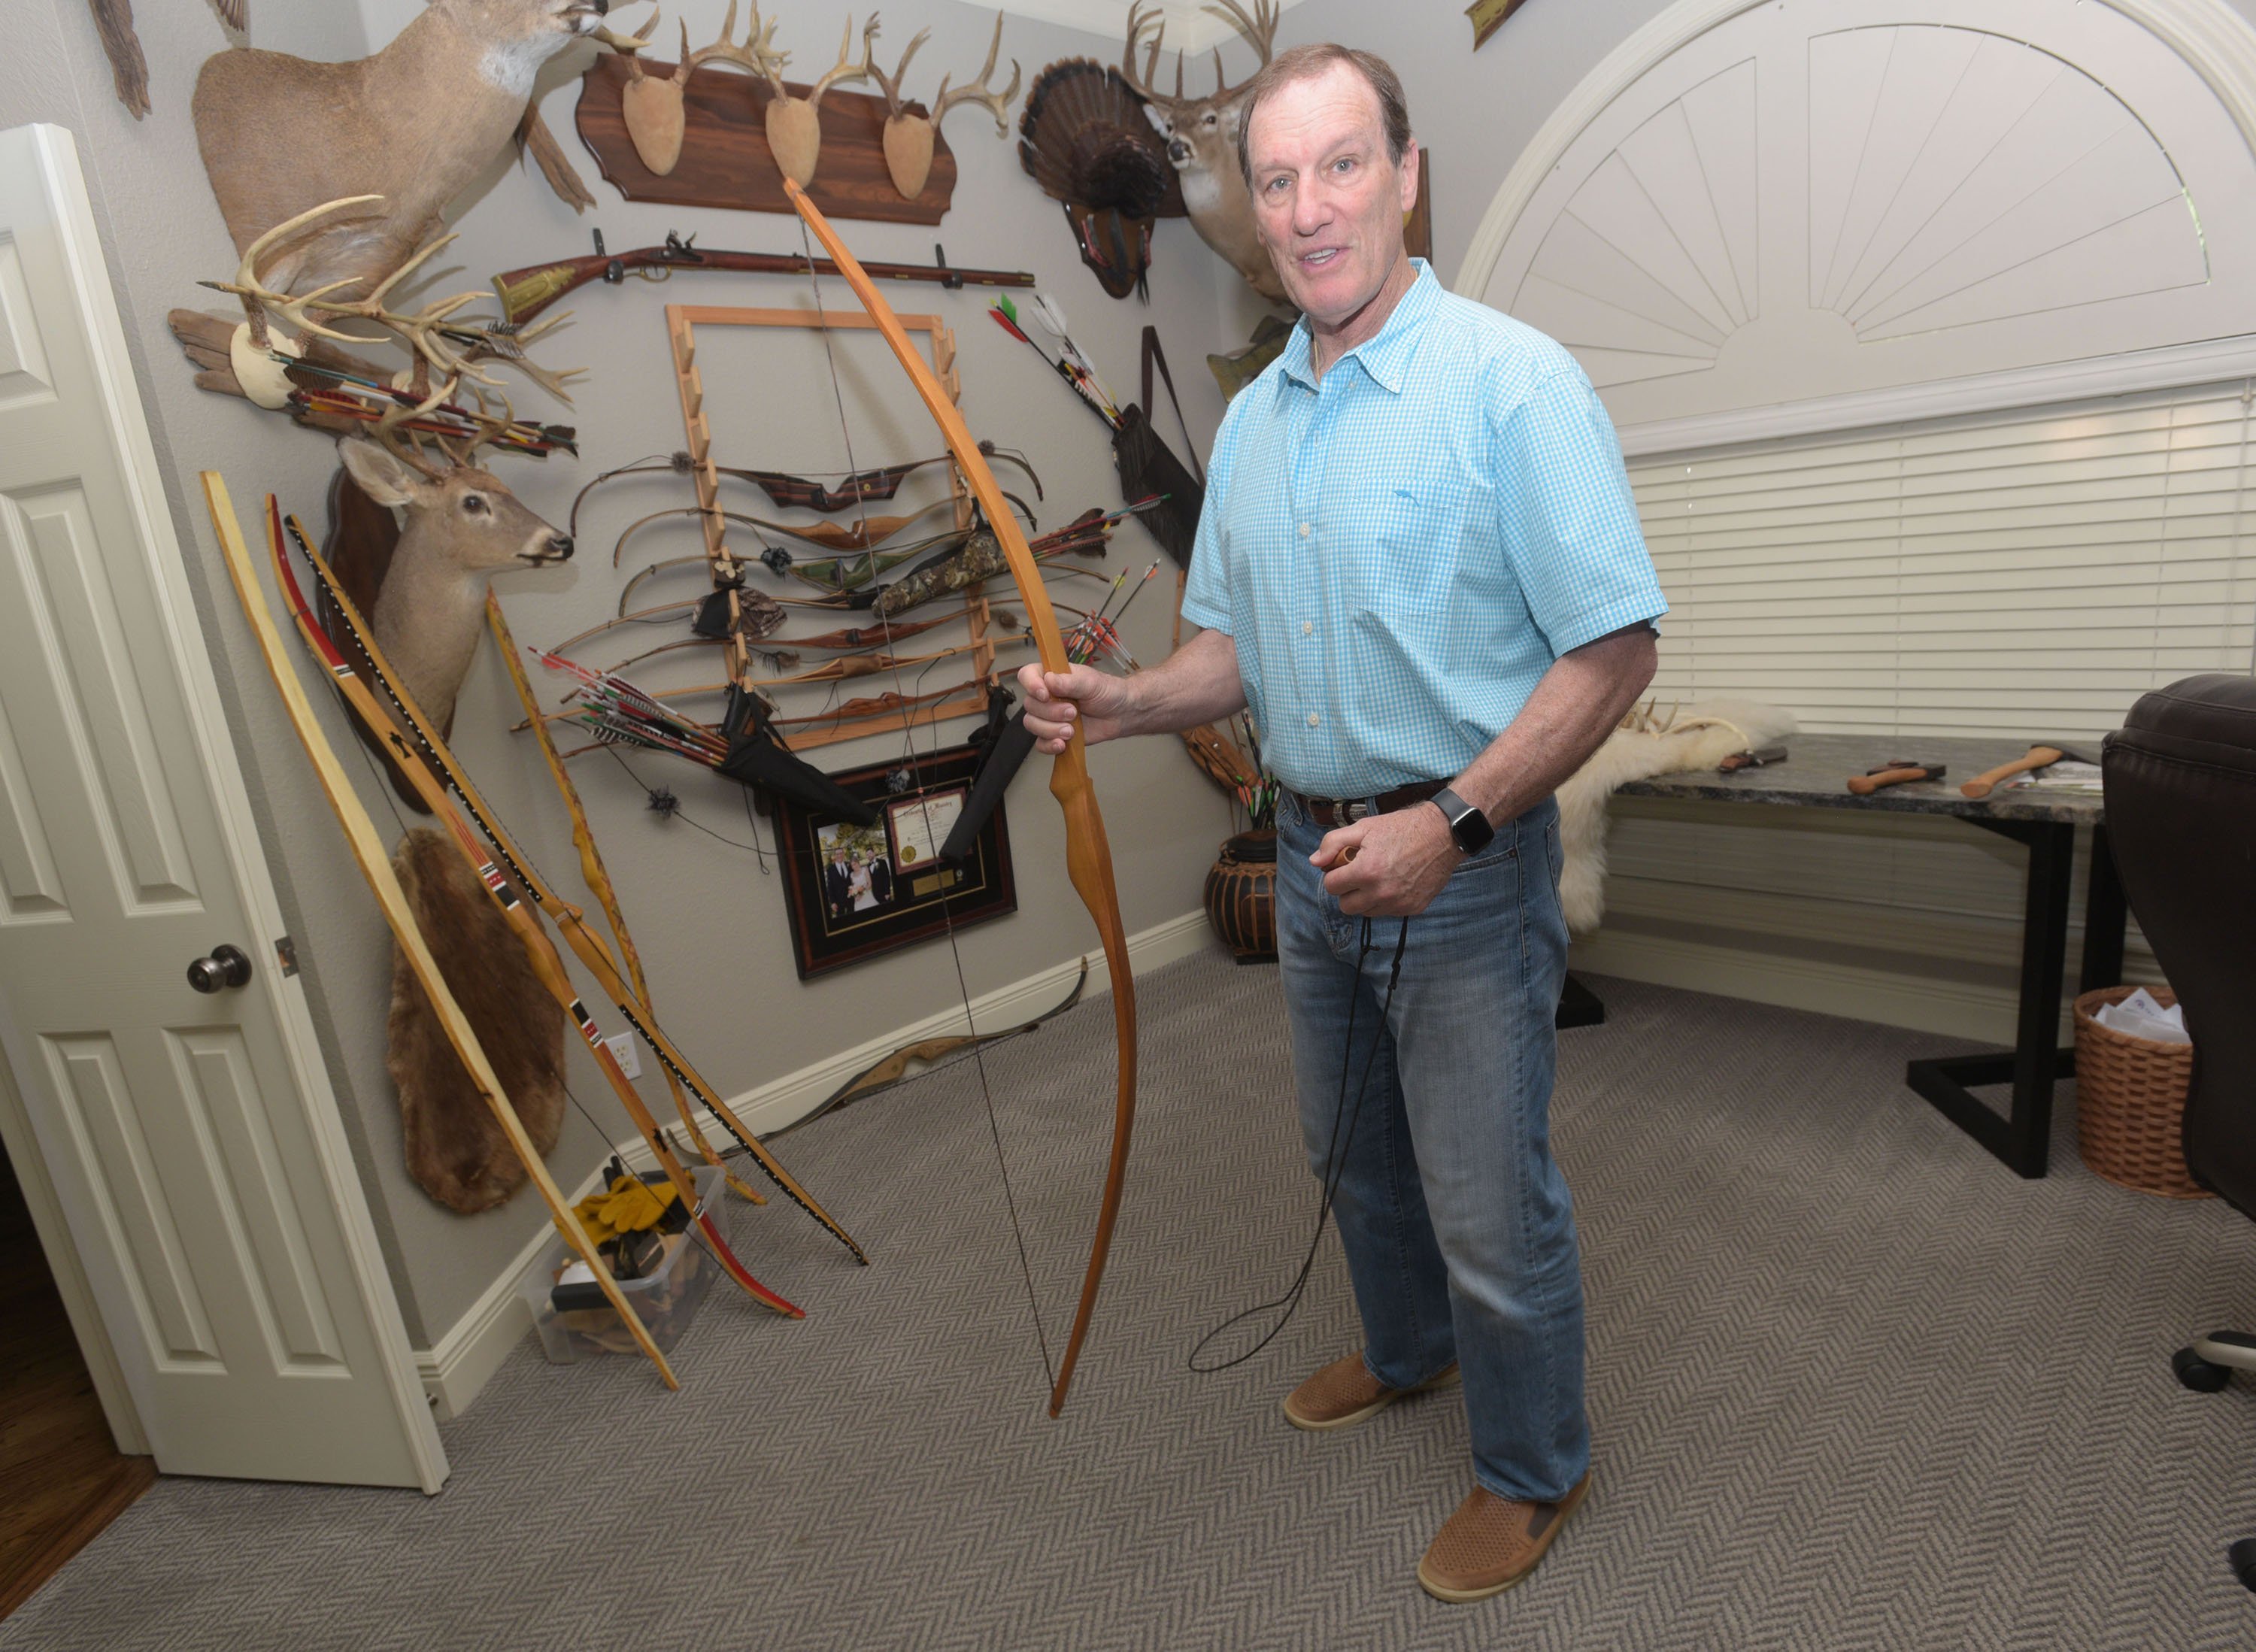 Crafty hunter creates bows, arrows, arrowheads himself  The Arkansas  Democrat-Gazette - Arkansas' Best News Source